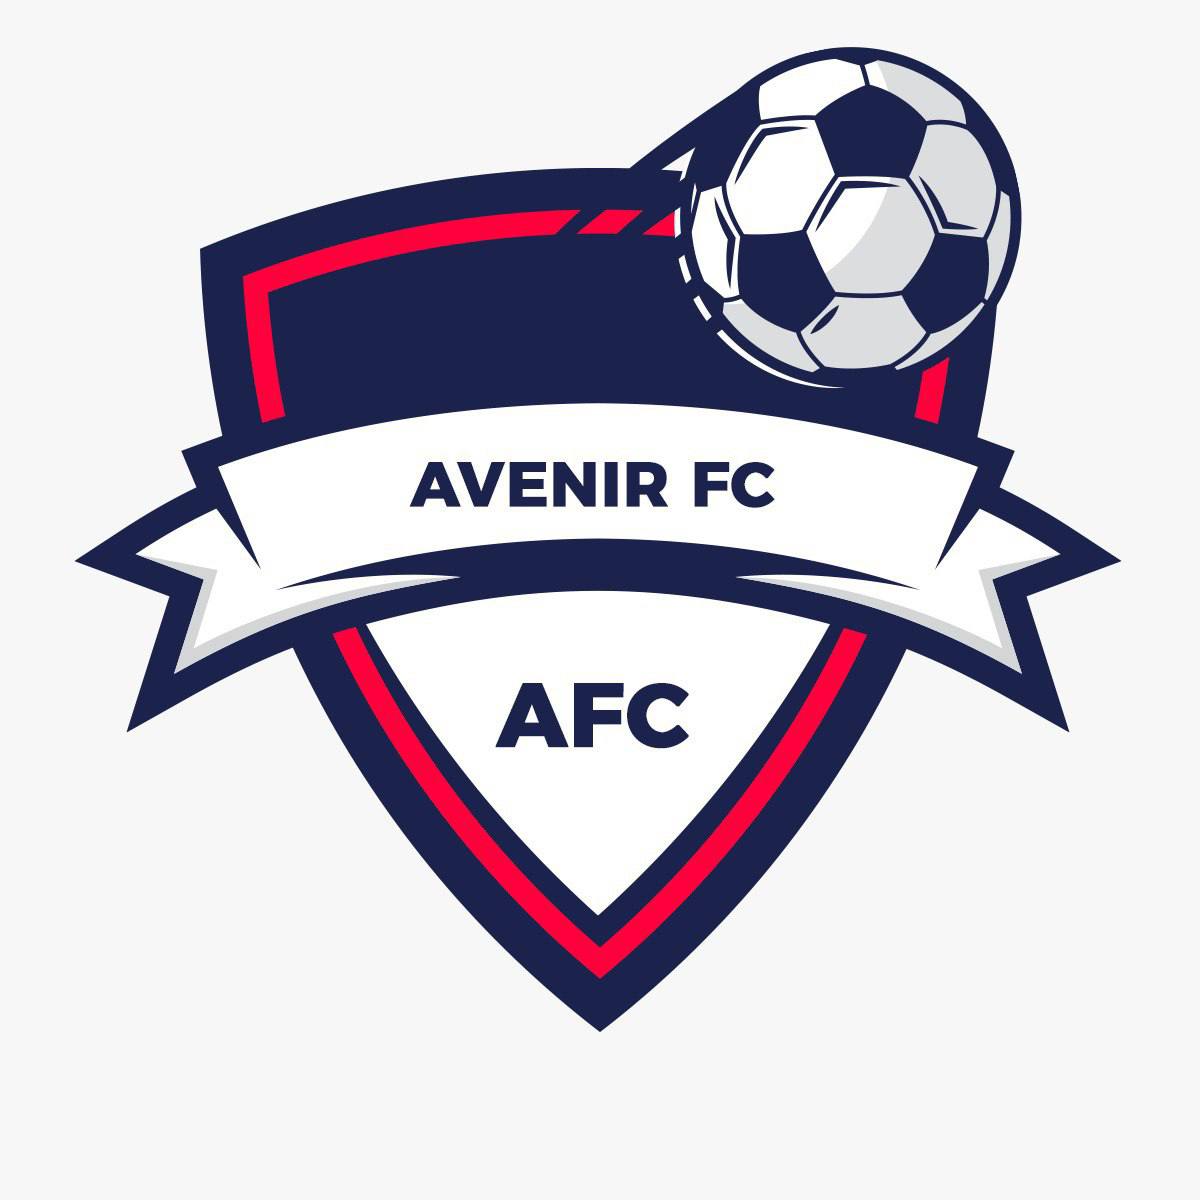 Avenir FC